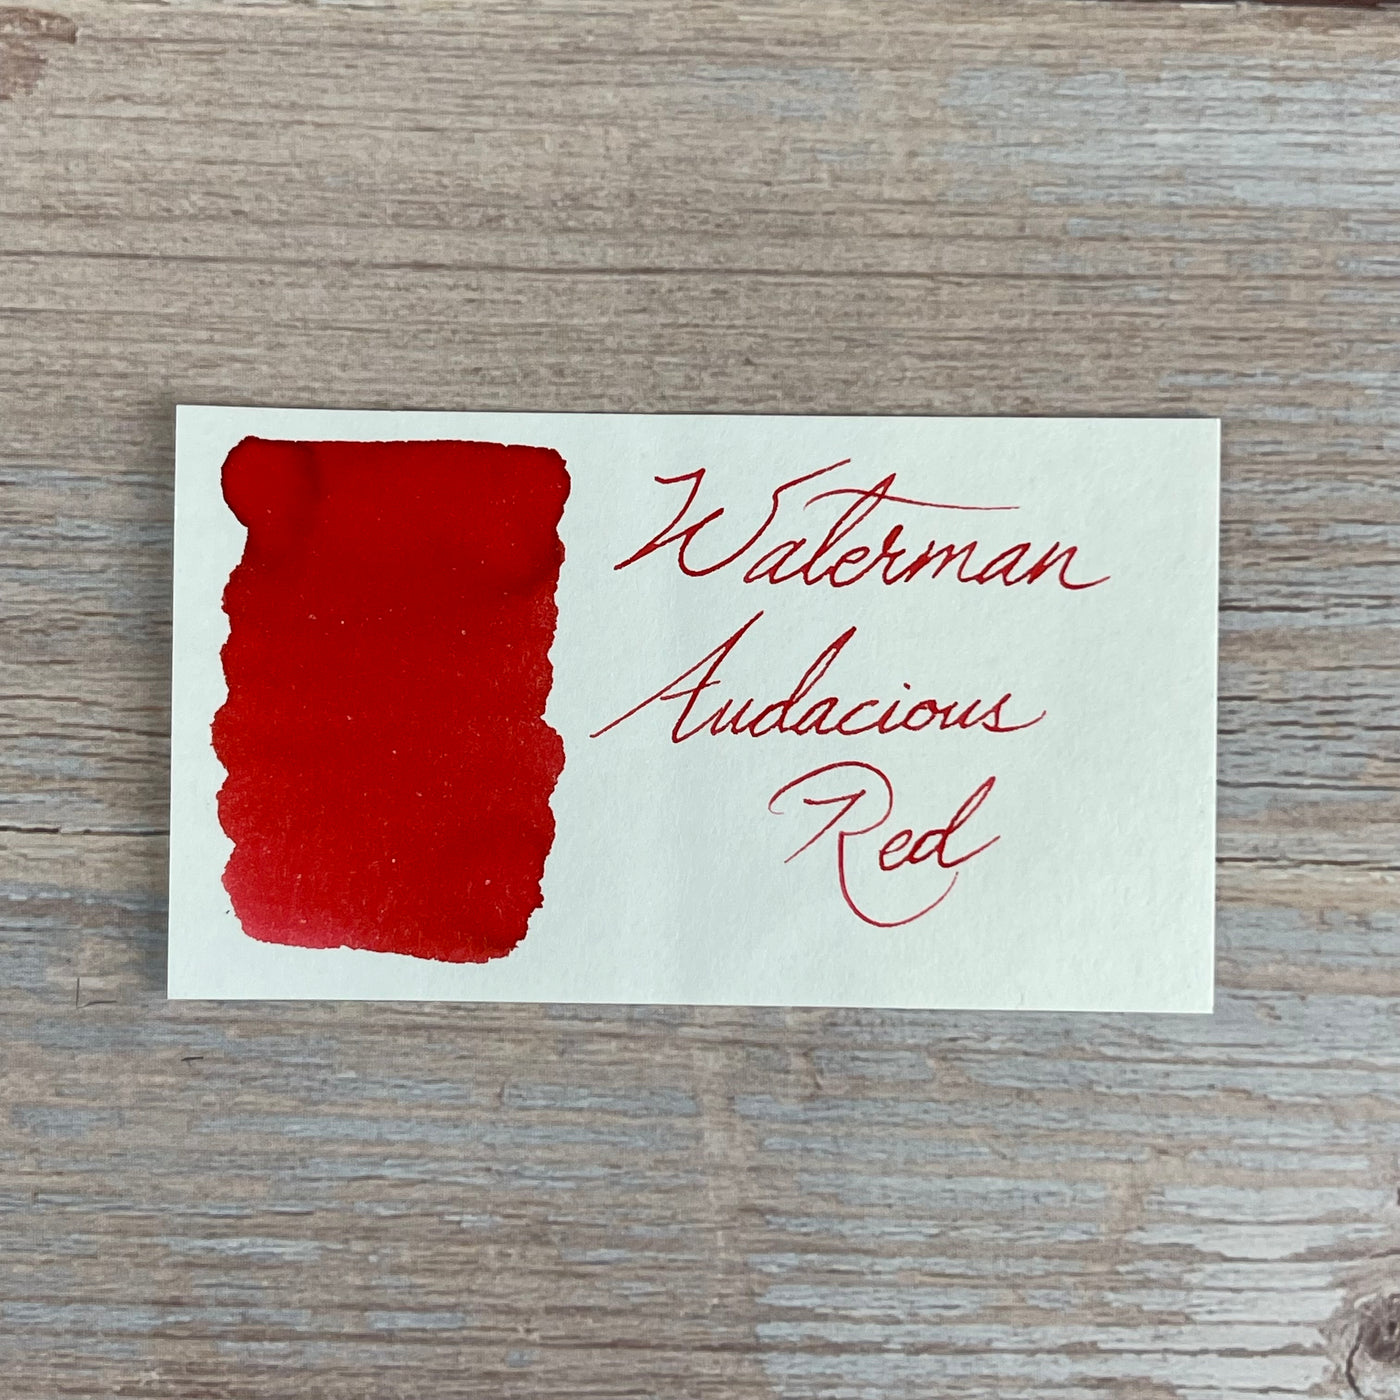 Waterman Audacious Red - 50ml Bottled Ink